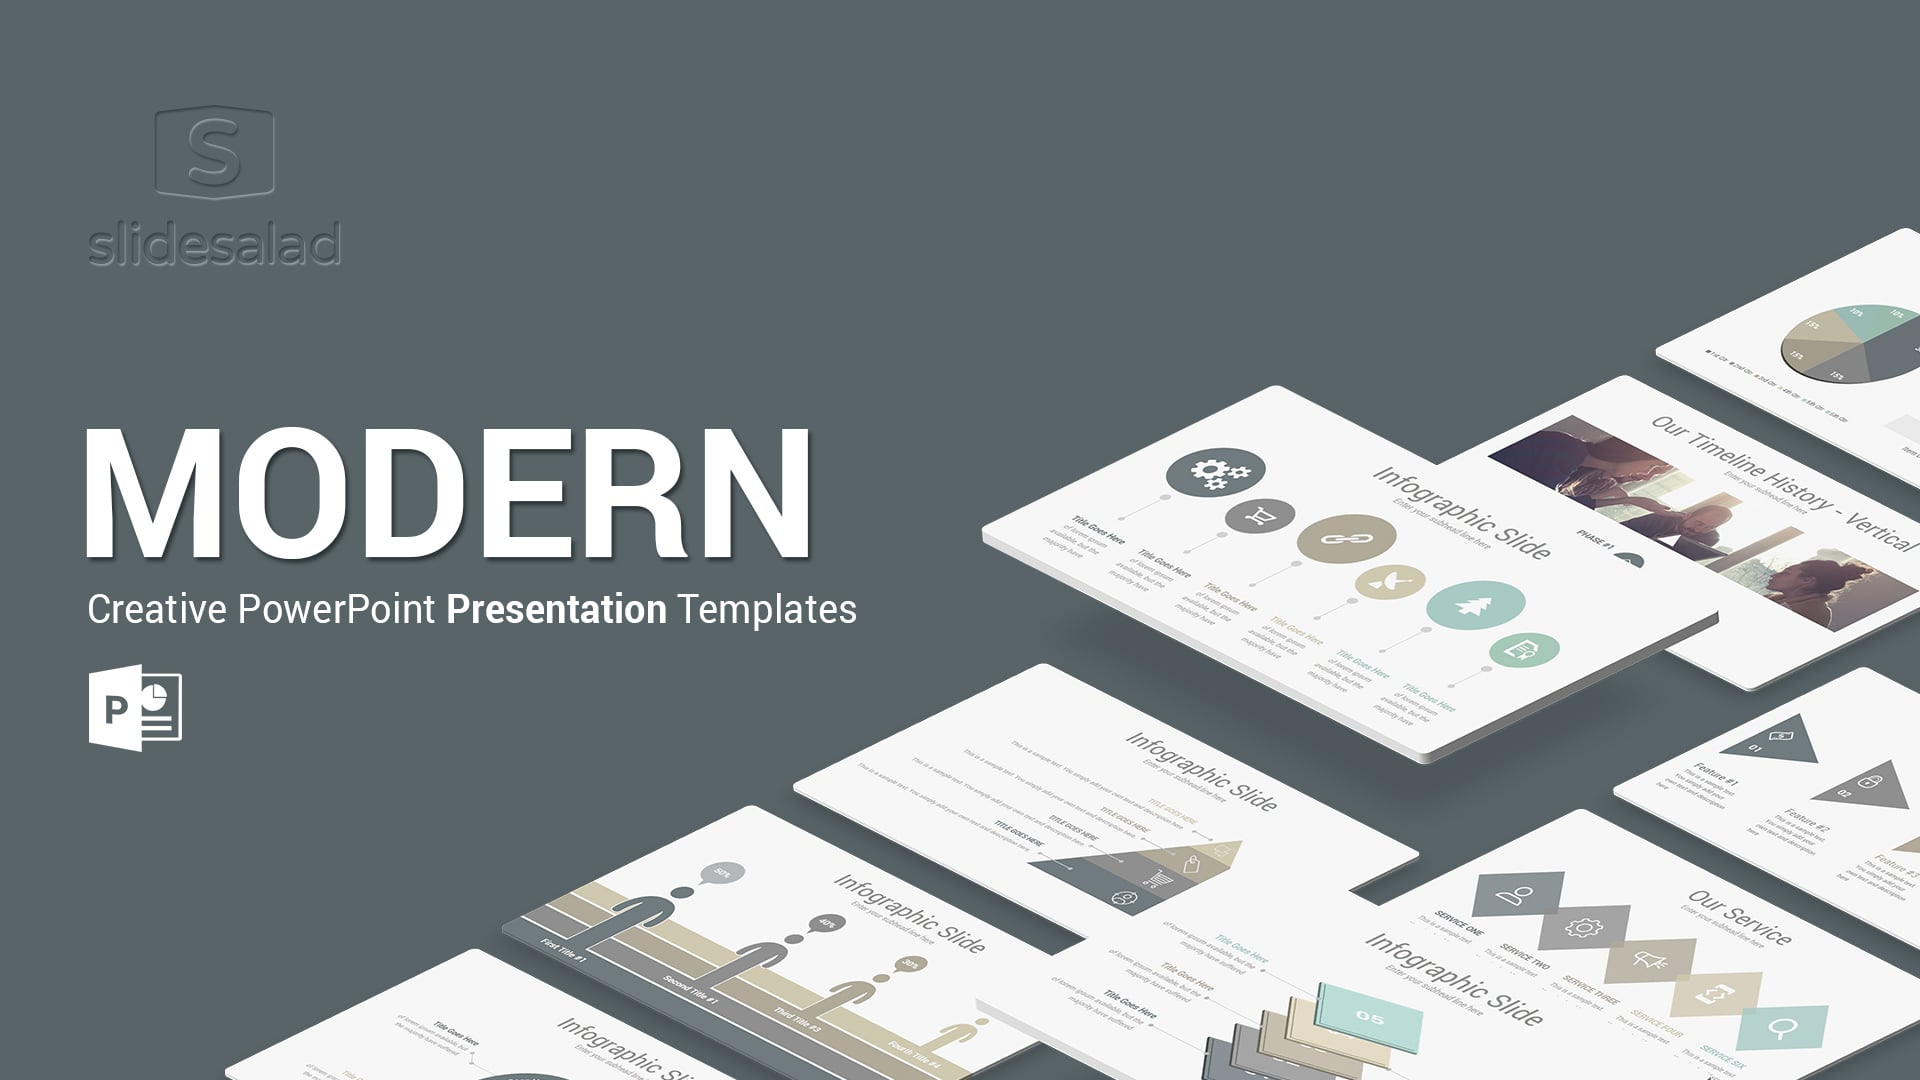 Modern - PowerPoint Presentation Templates Design for Trendy Presentations